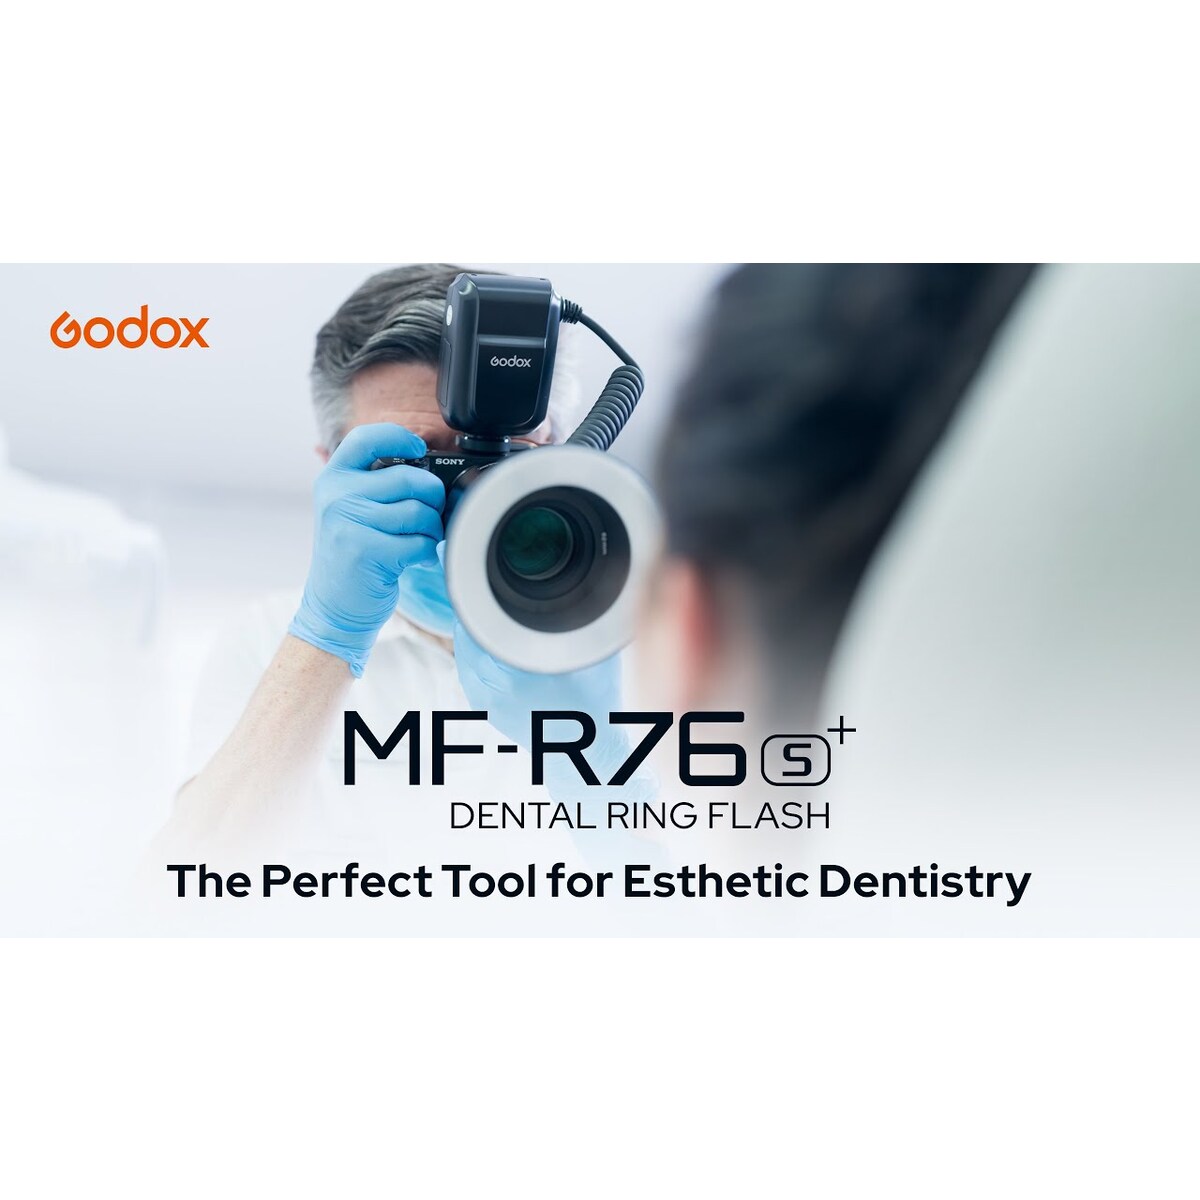 Godox MF-R76S+ Dental Flash